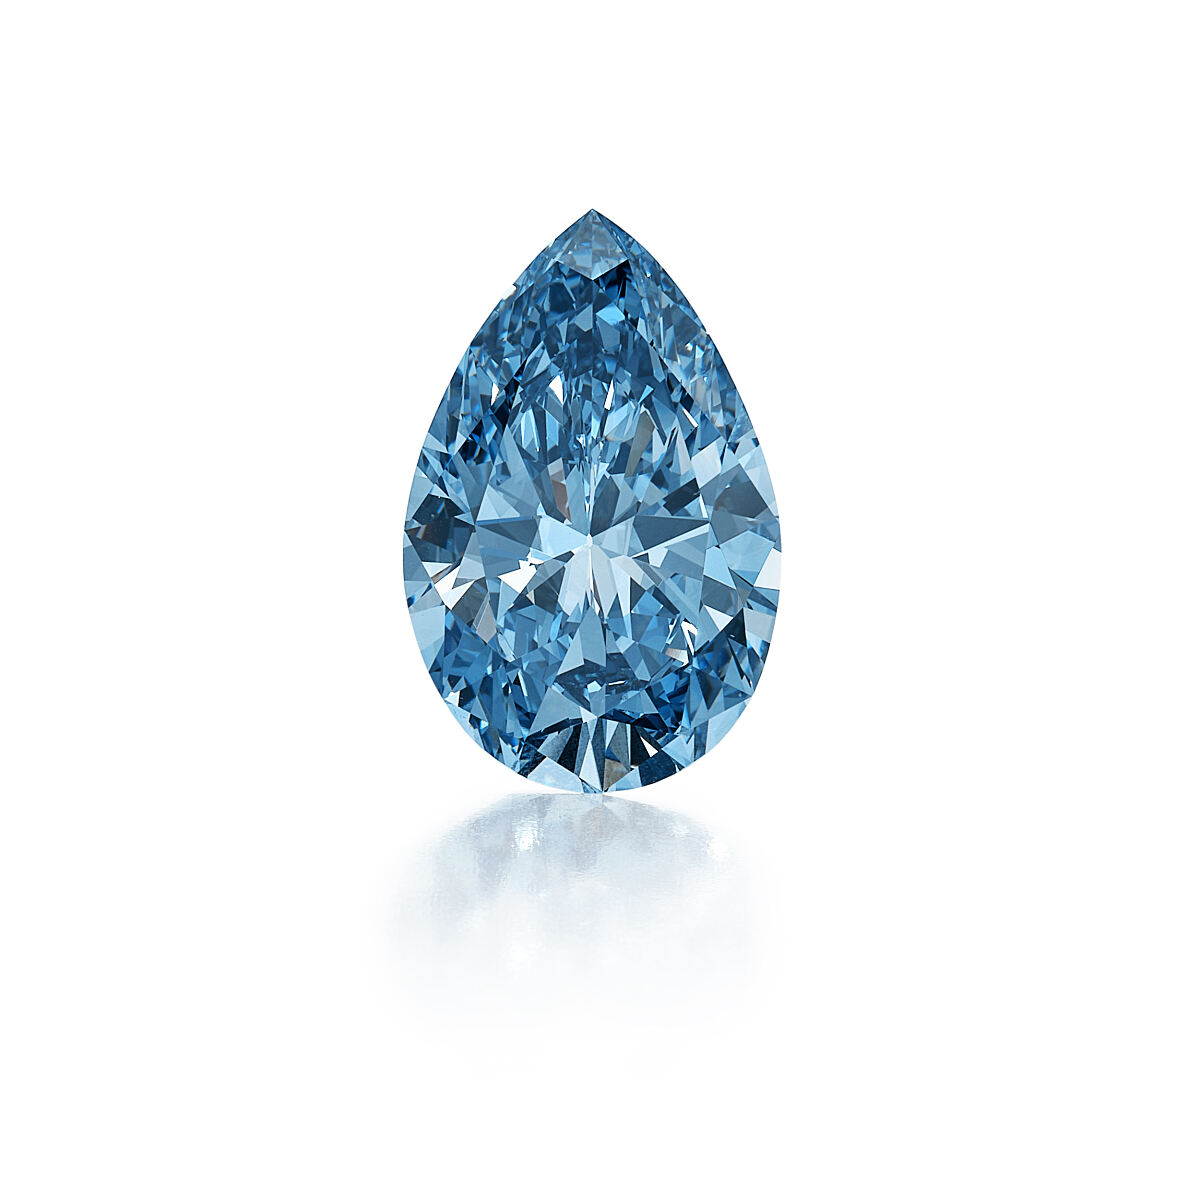 Bulgari Laguna Blu, 11.16 carats, To be sold at Sothebys Geneva Luxury Week (3)